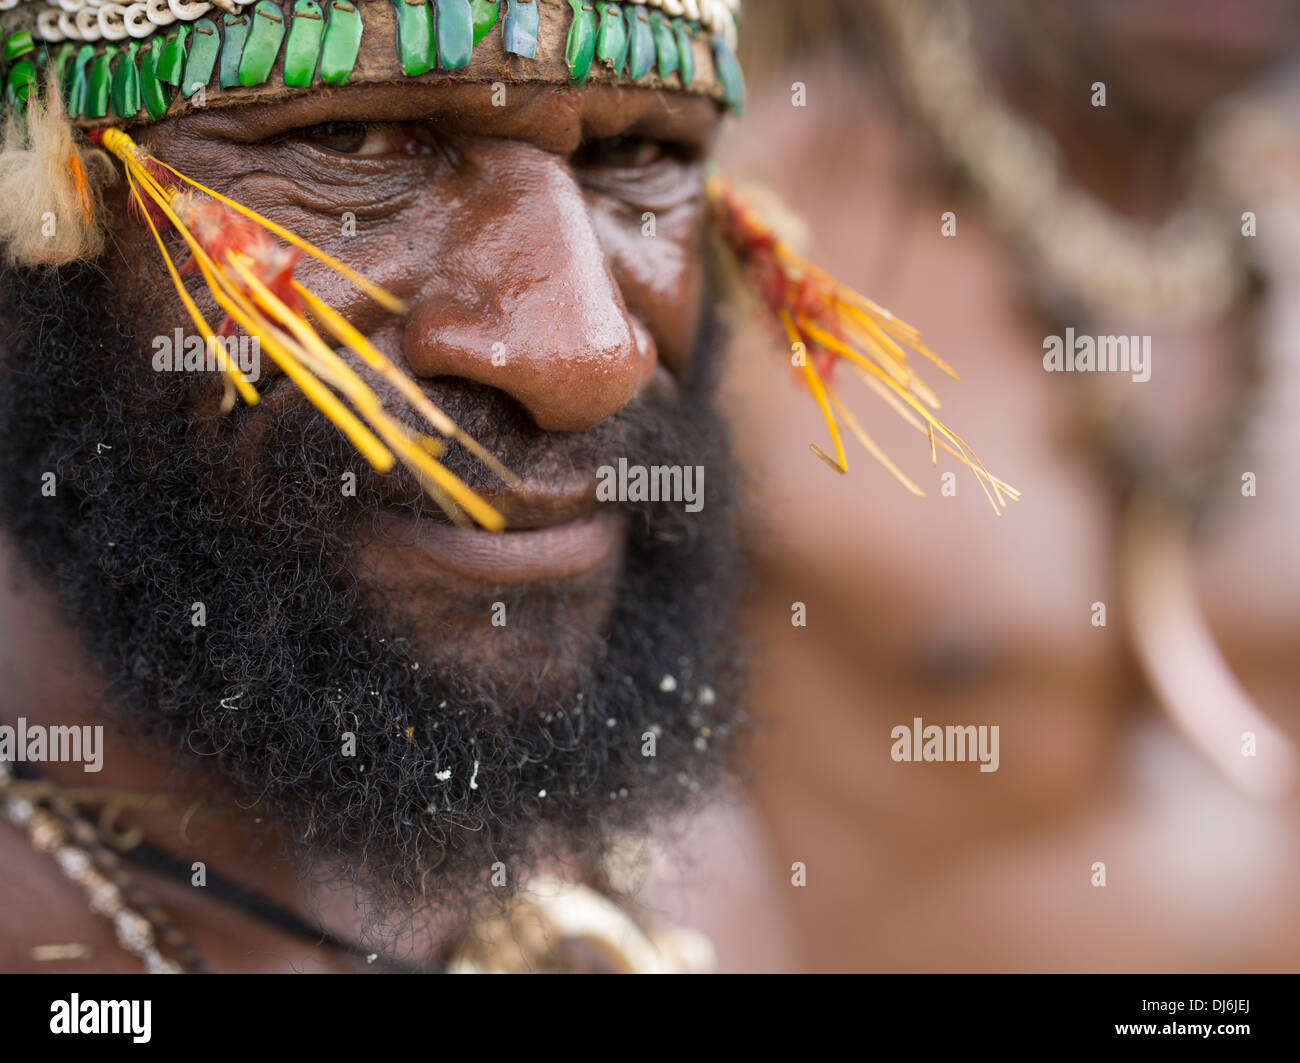 Beared tribal man with beetle wing casing headband at Goroka Show tribal singsing festival, Papua New Guinea Stock Photo